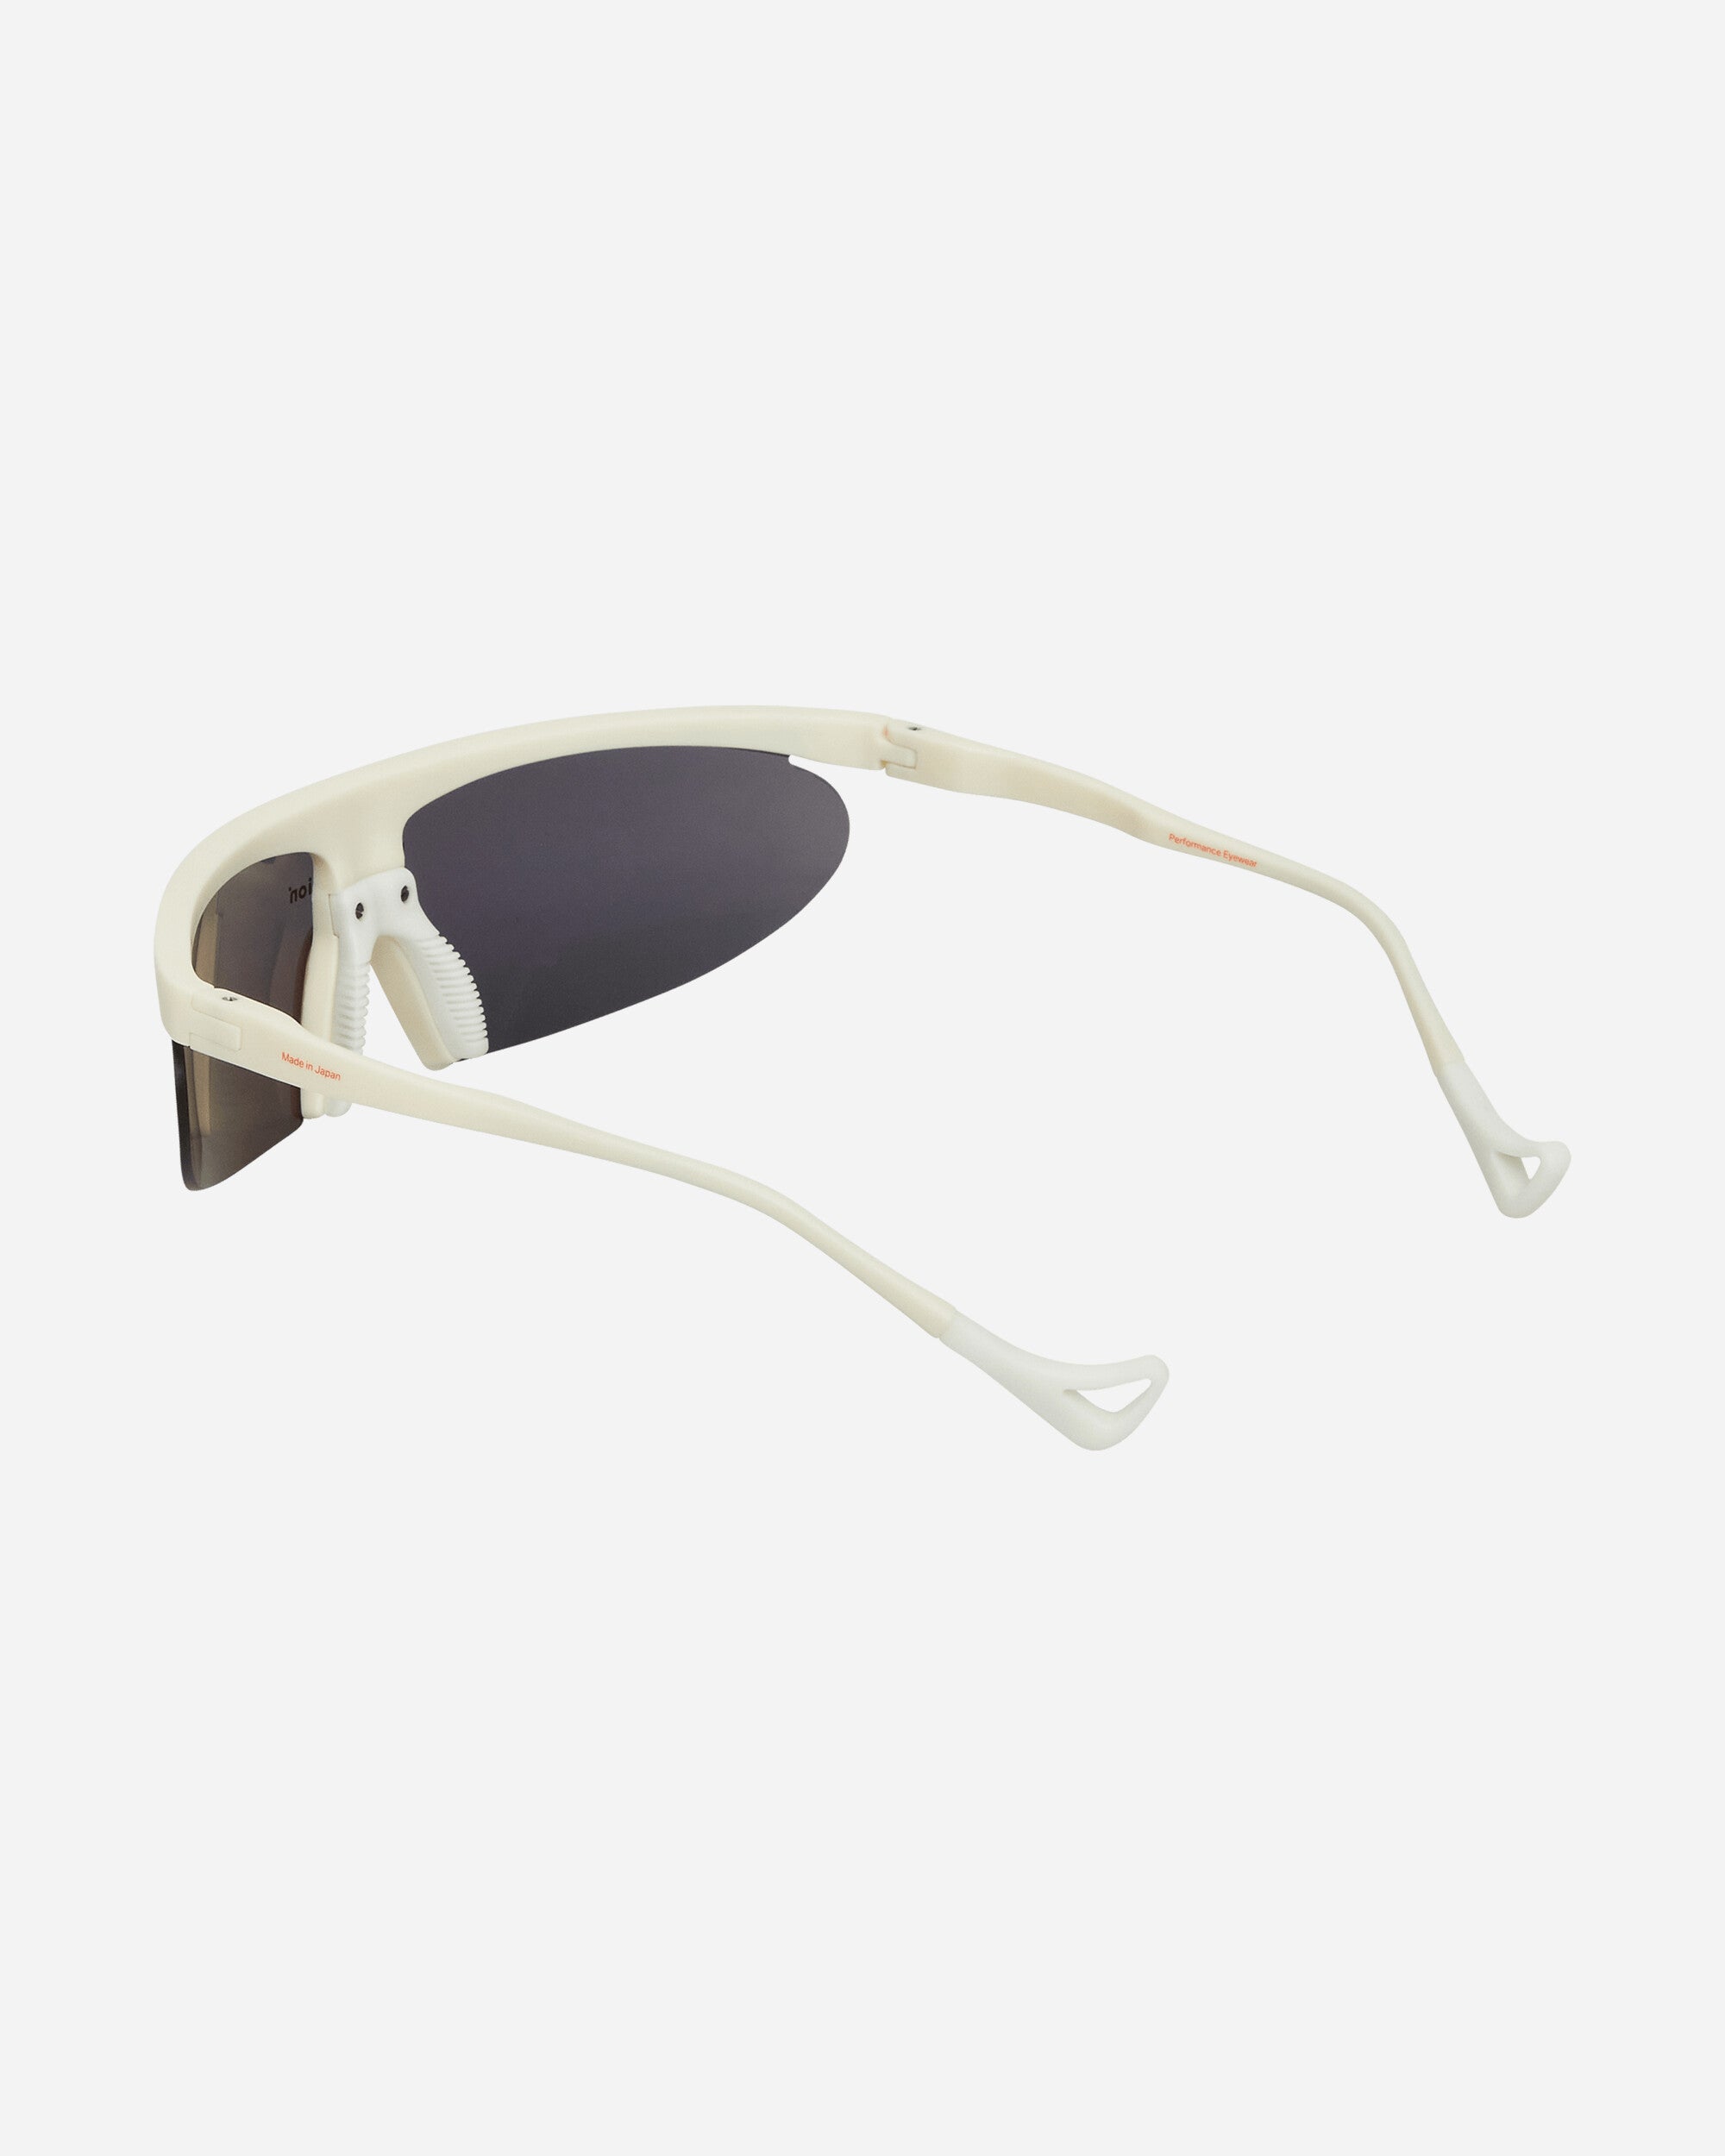 District Vision Koharu Eclipse Limestone/D+ Onyx Mirror Eyewear Sunglasses DVG005 LOM